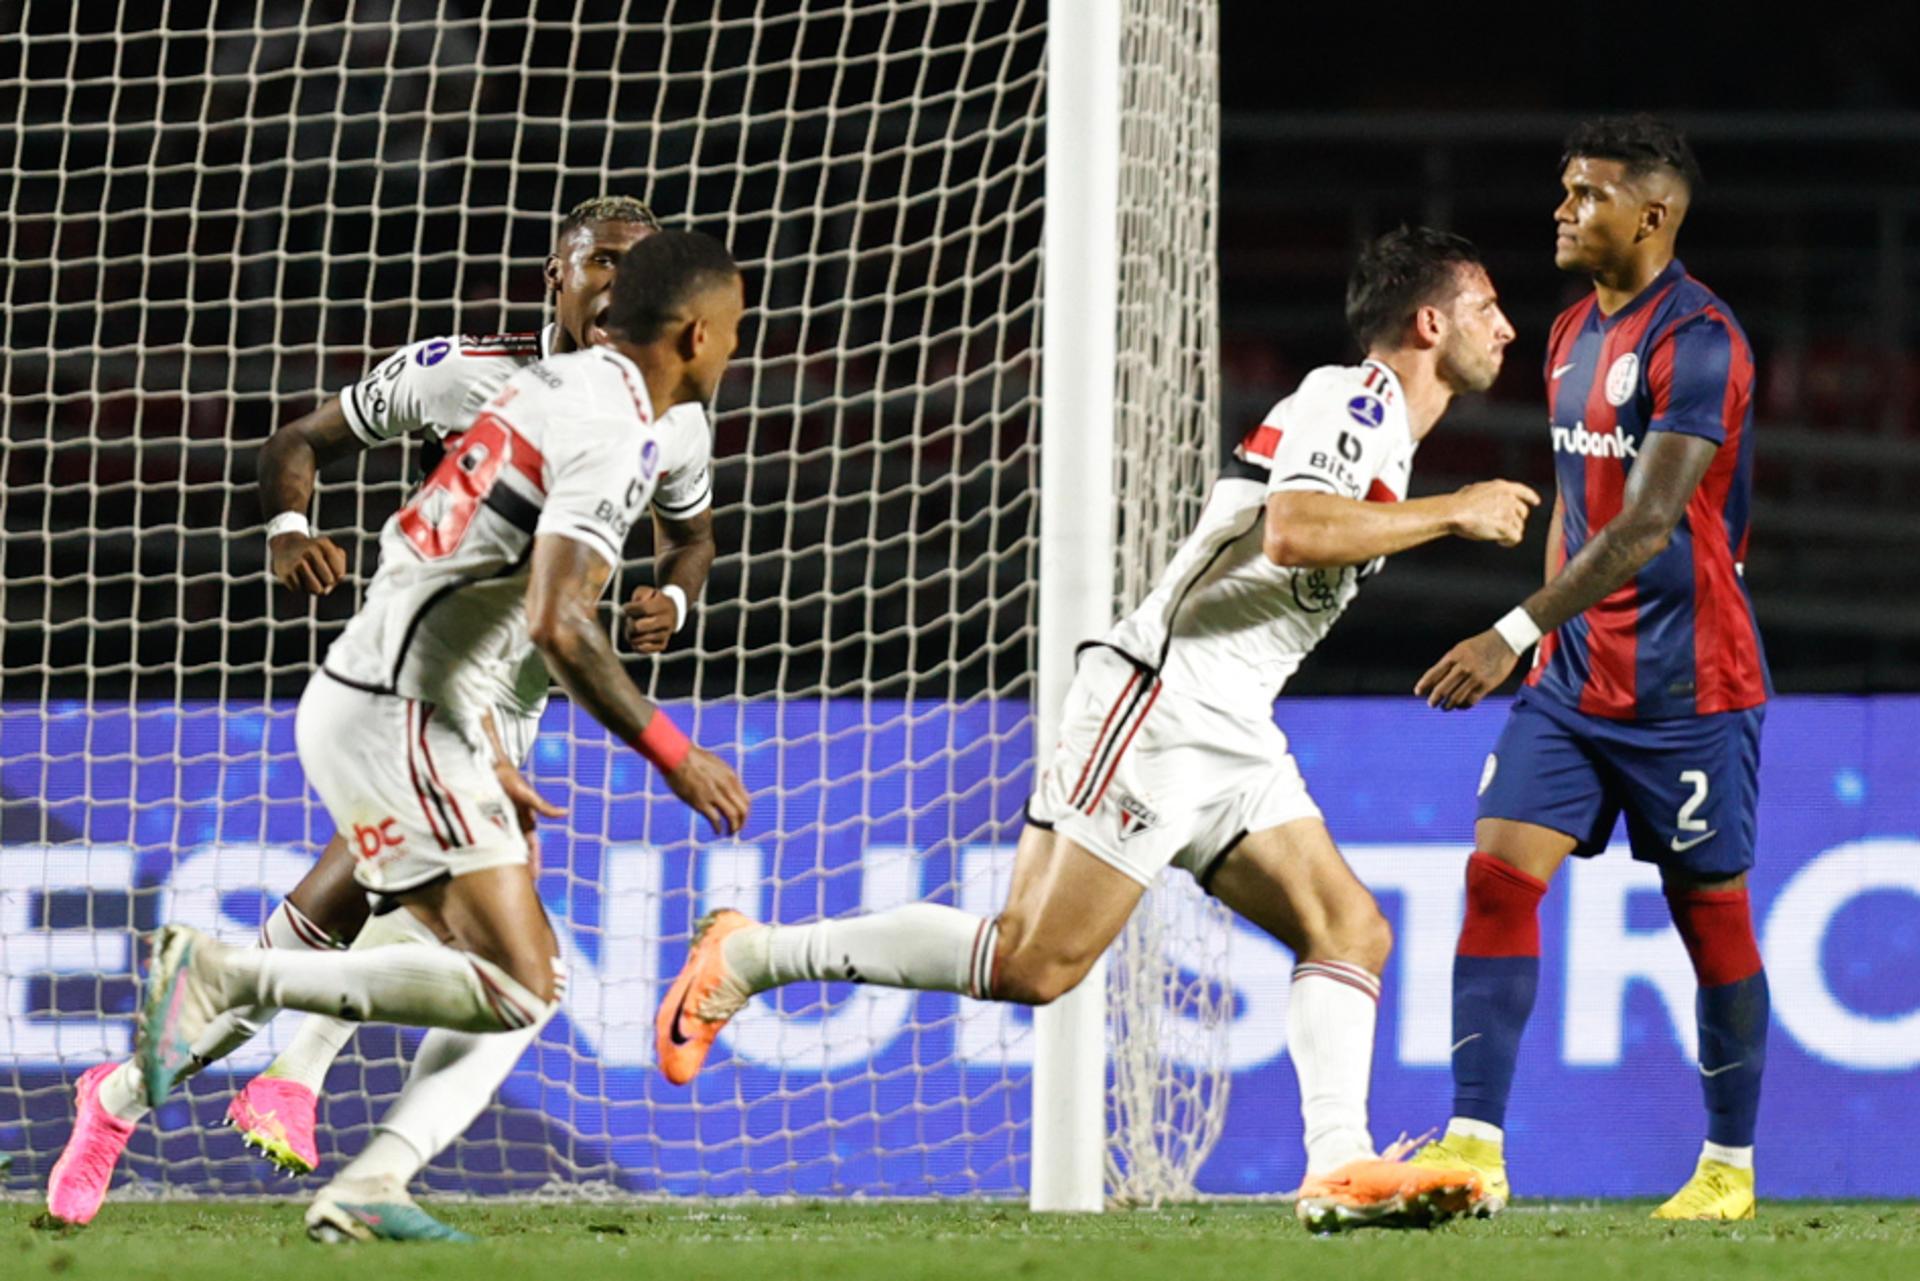 HL Copa Sudamericana - São Paulo vs. San Lorenzo